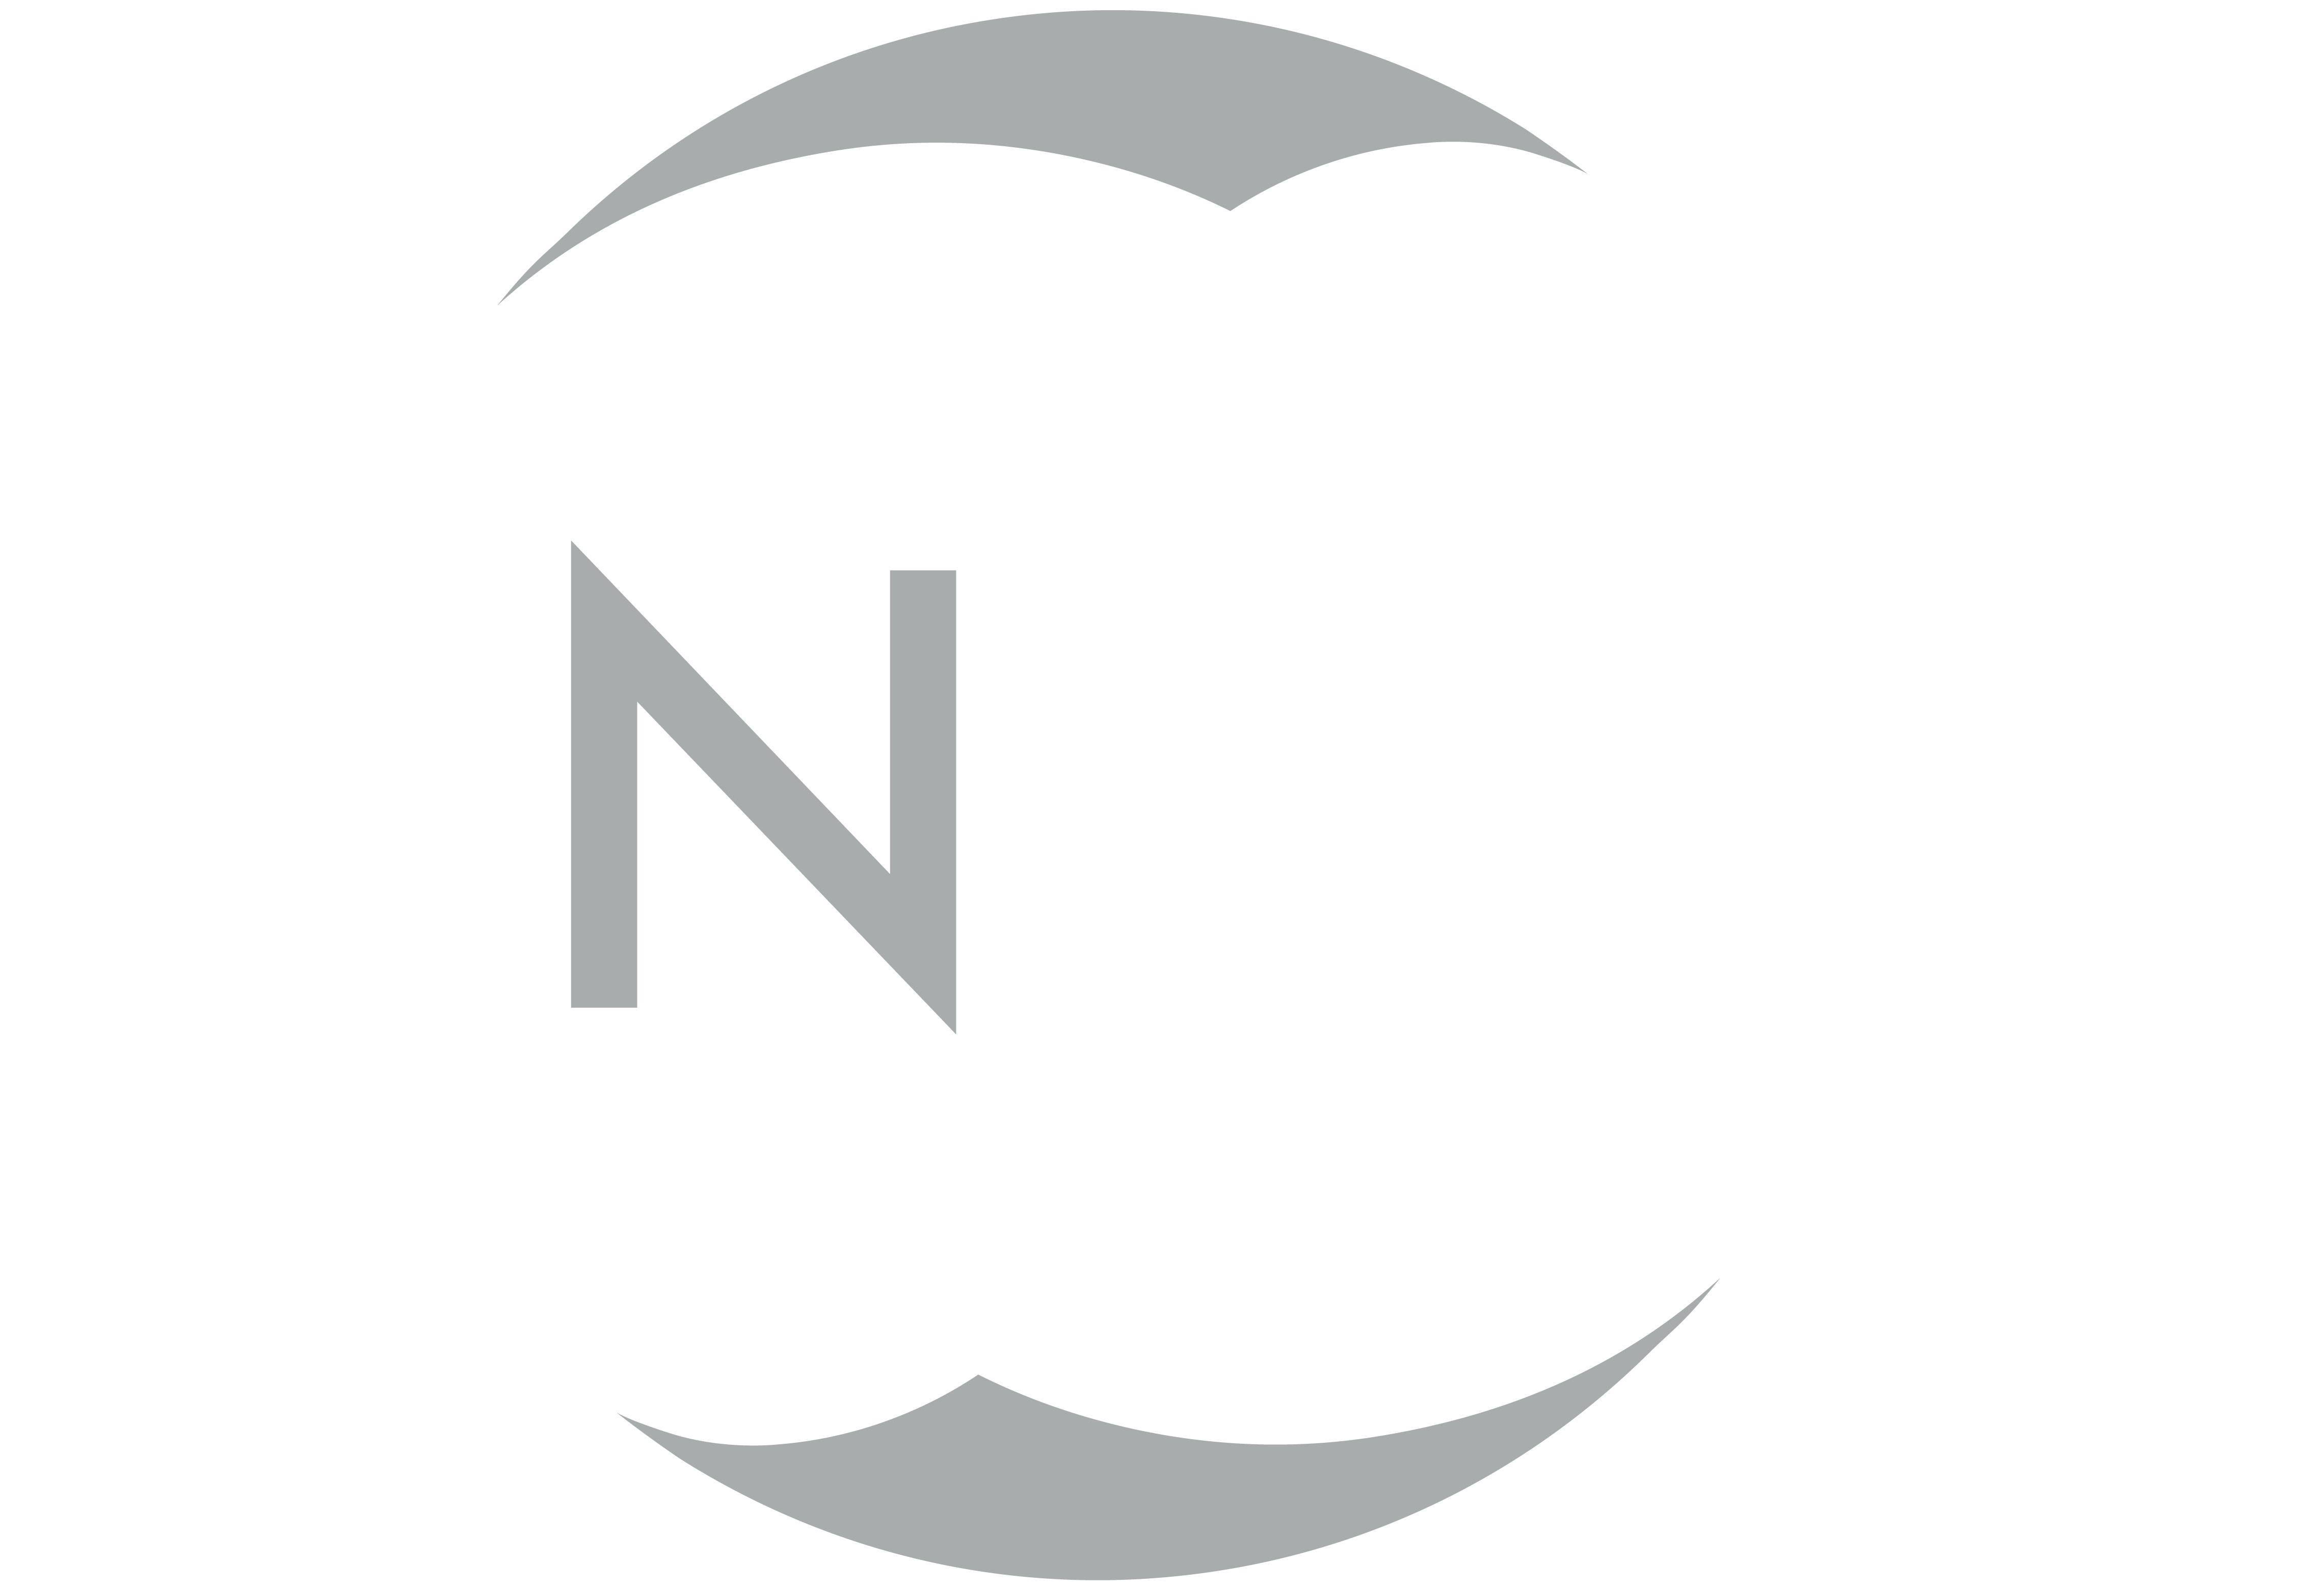 Kiniksa logo